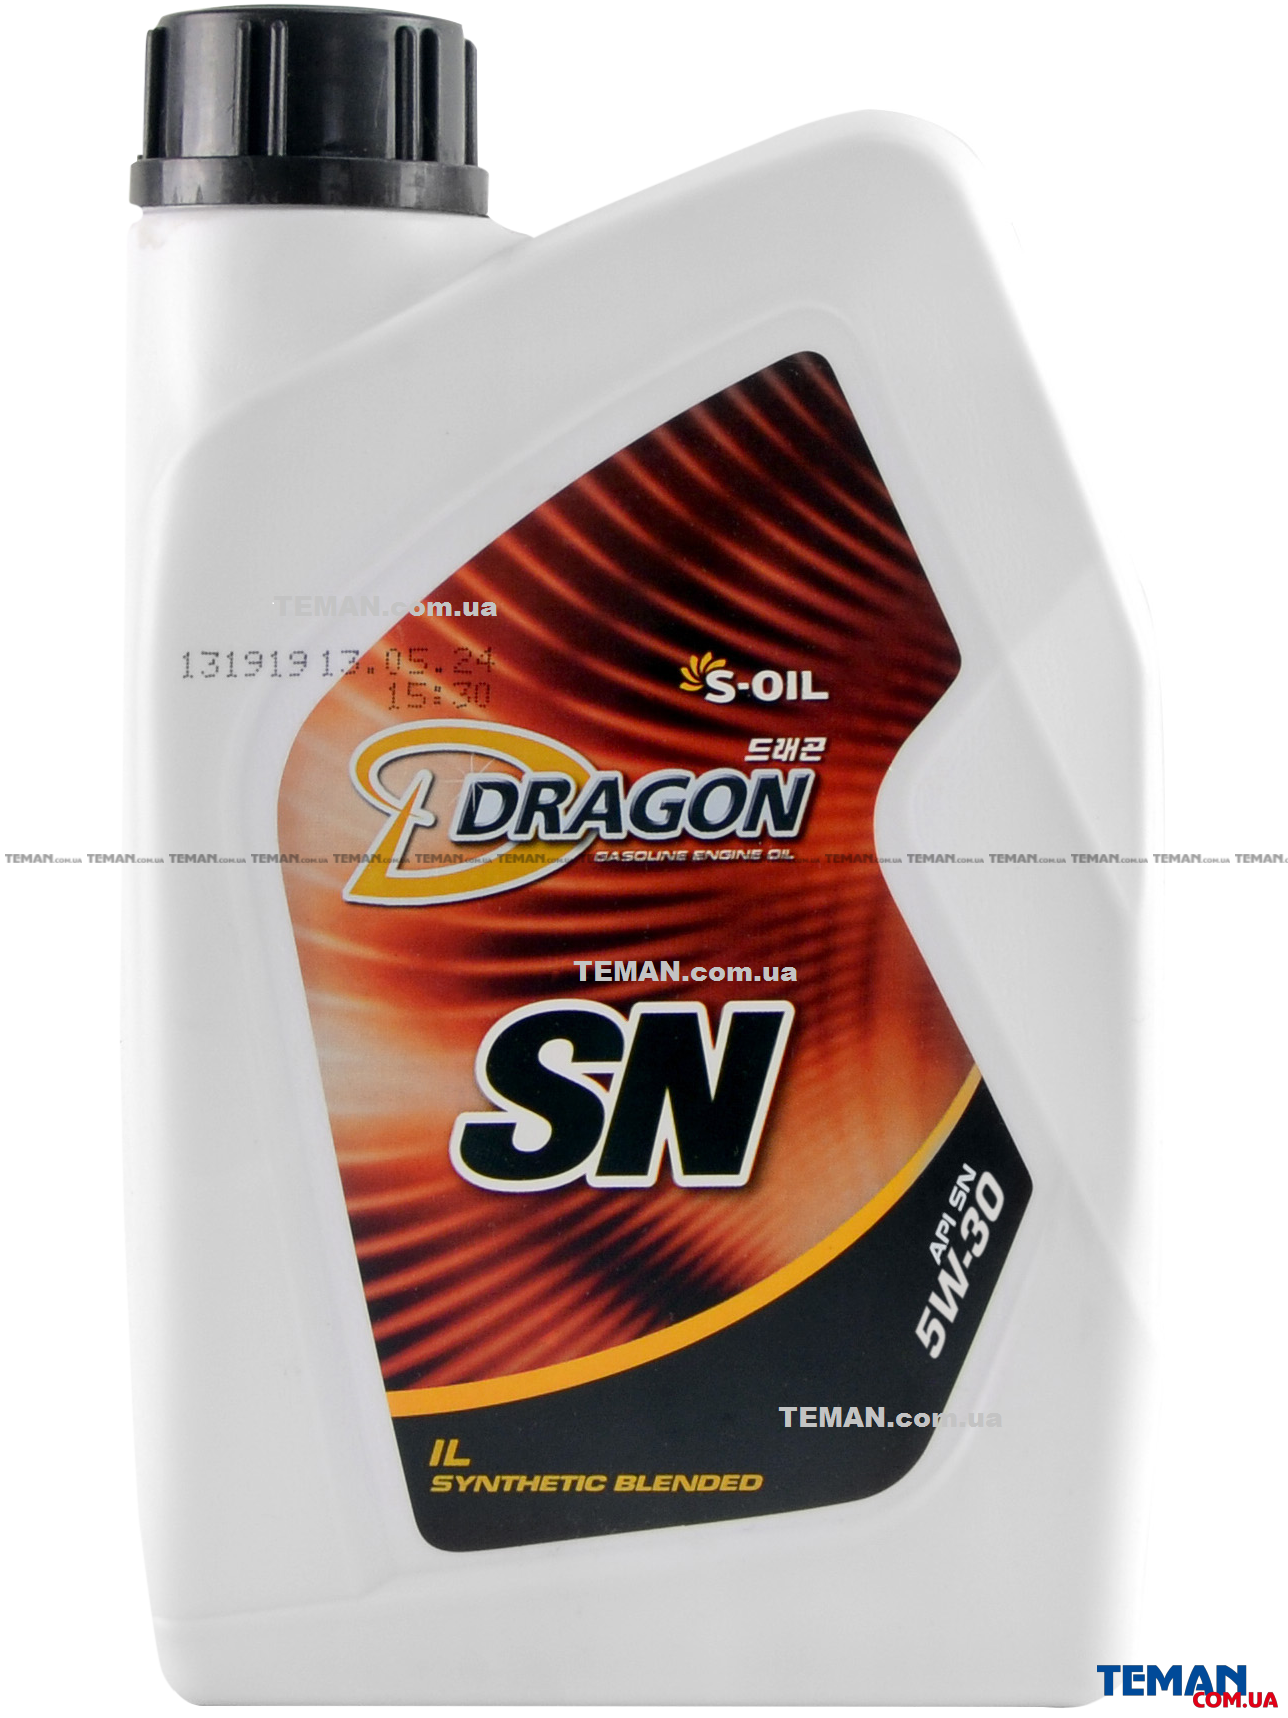  Купить Синтетическое моторное масло DRAGON SN 5W30, 1 лS-OIL DRAGONSN5W301   